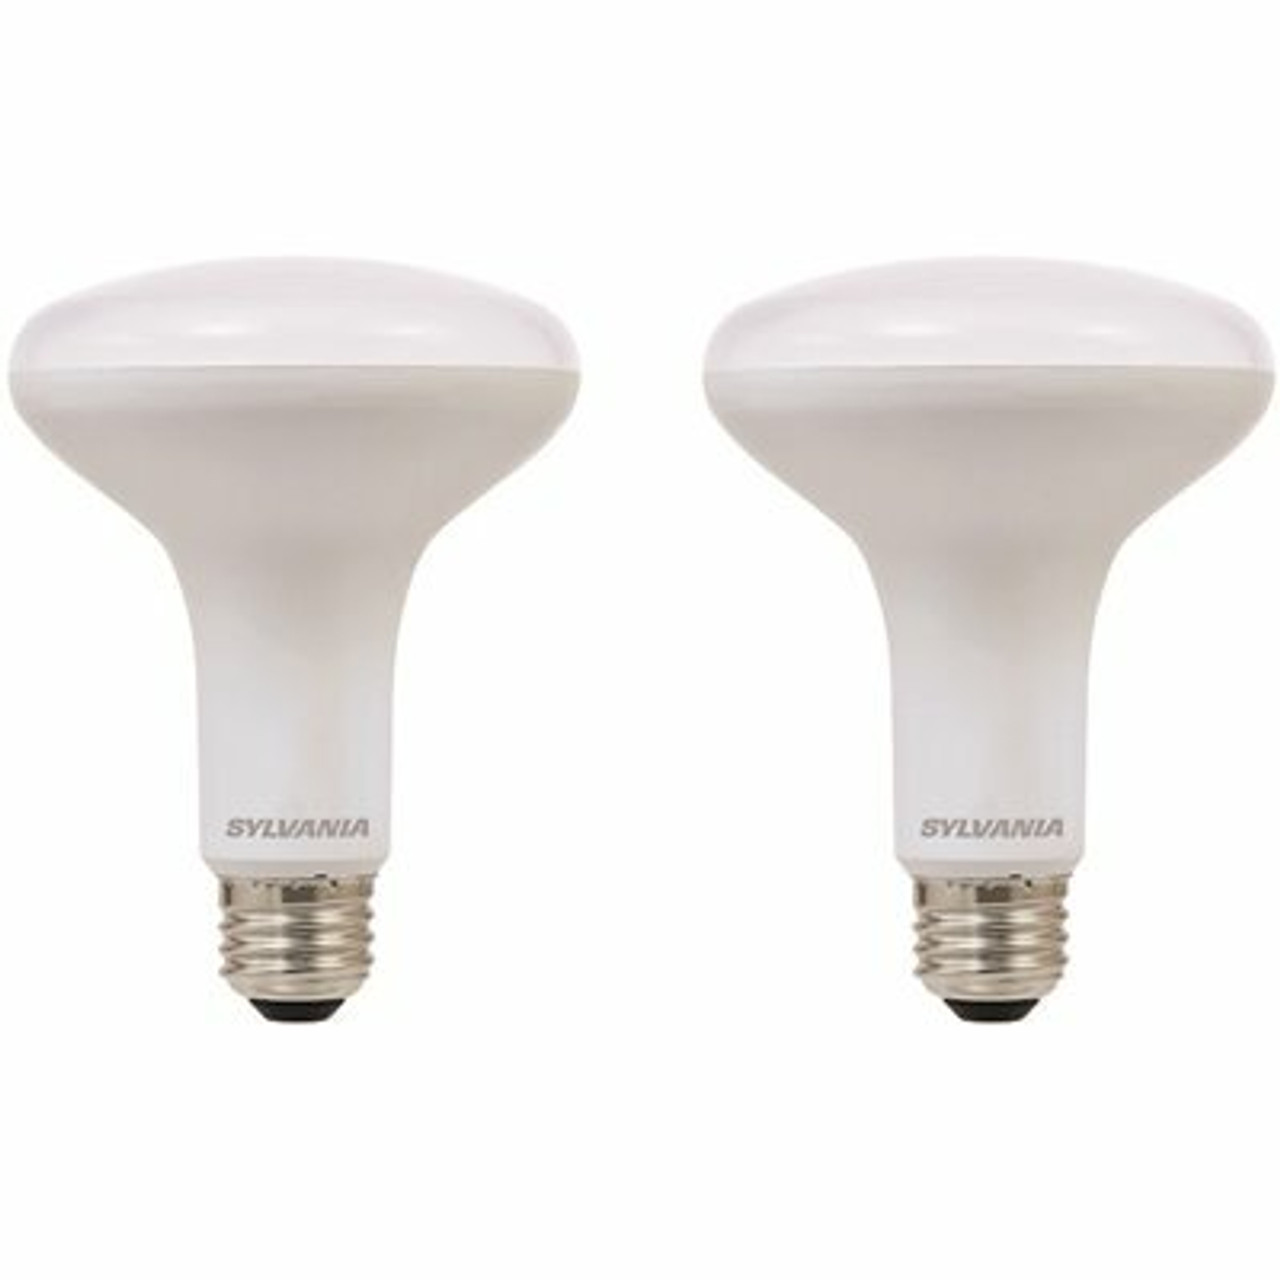 Sylvania 65-Watt Equivalent Br30 Dimmable Lightshield Germicidal 5000K Daylight White Led Light Bulbs (2-Pack)